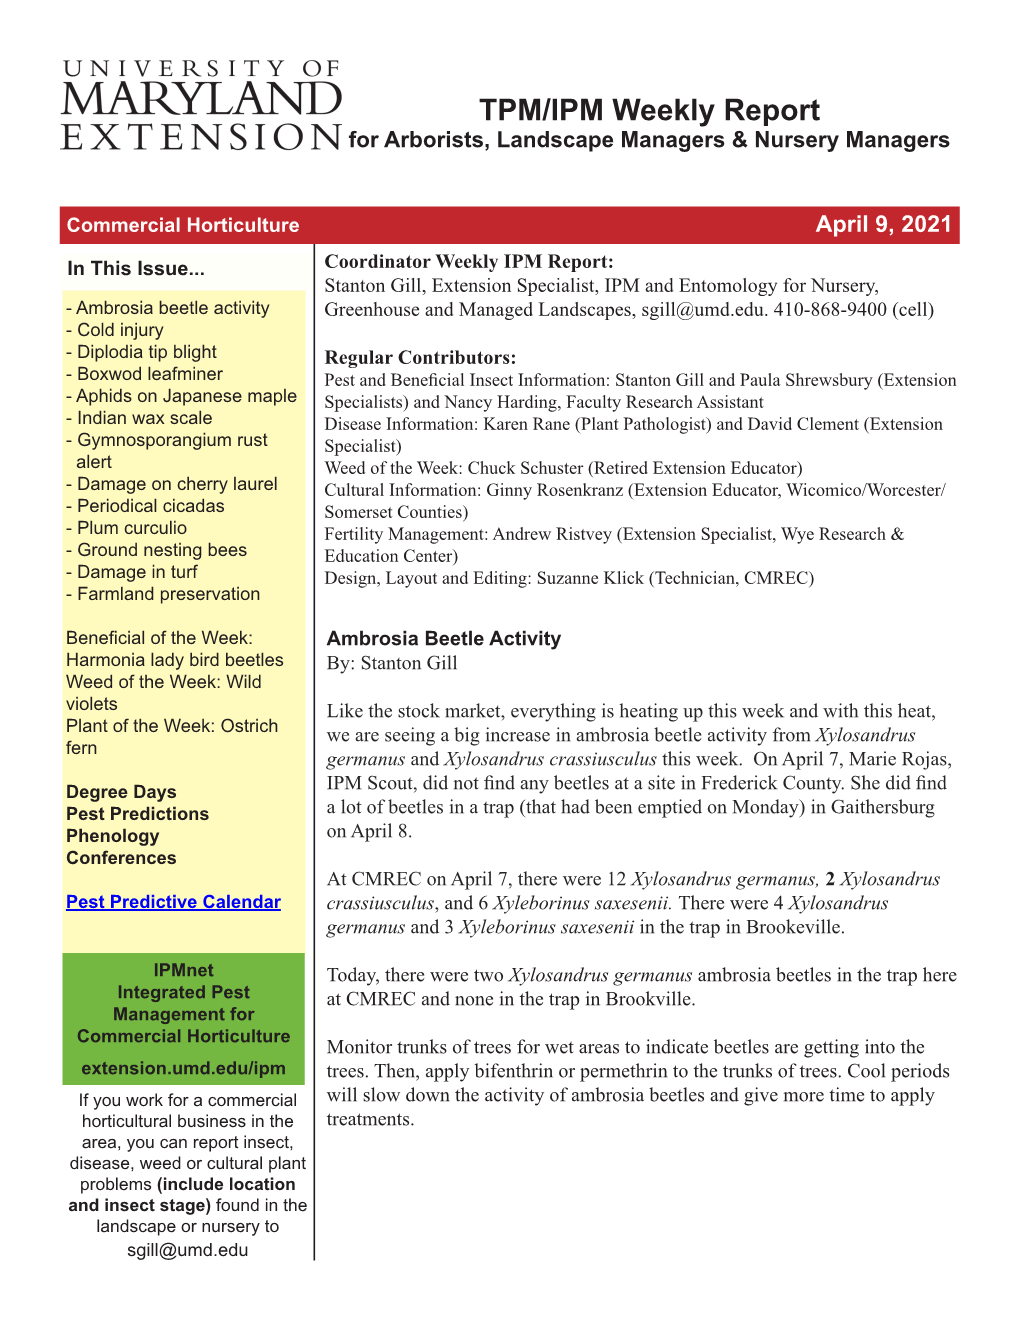 April 9, 2021 Landscape and Nursery IPM Report